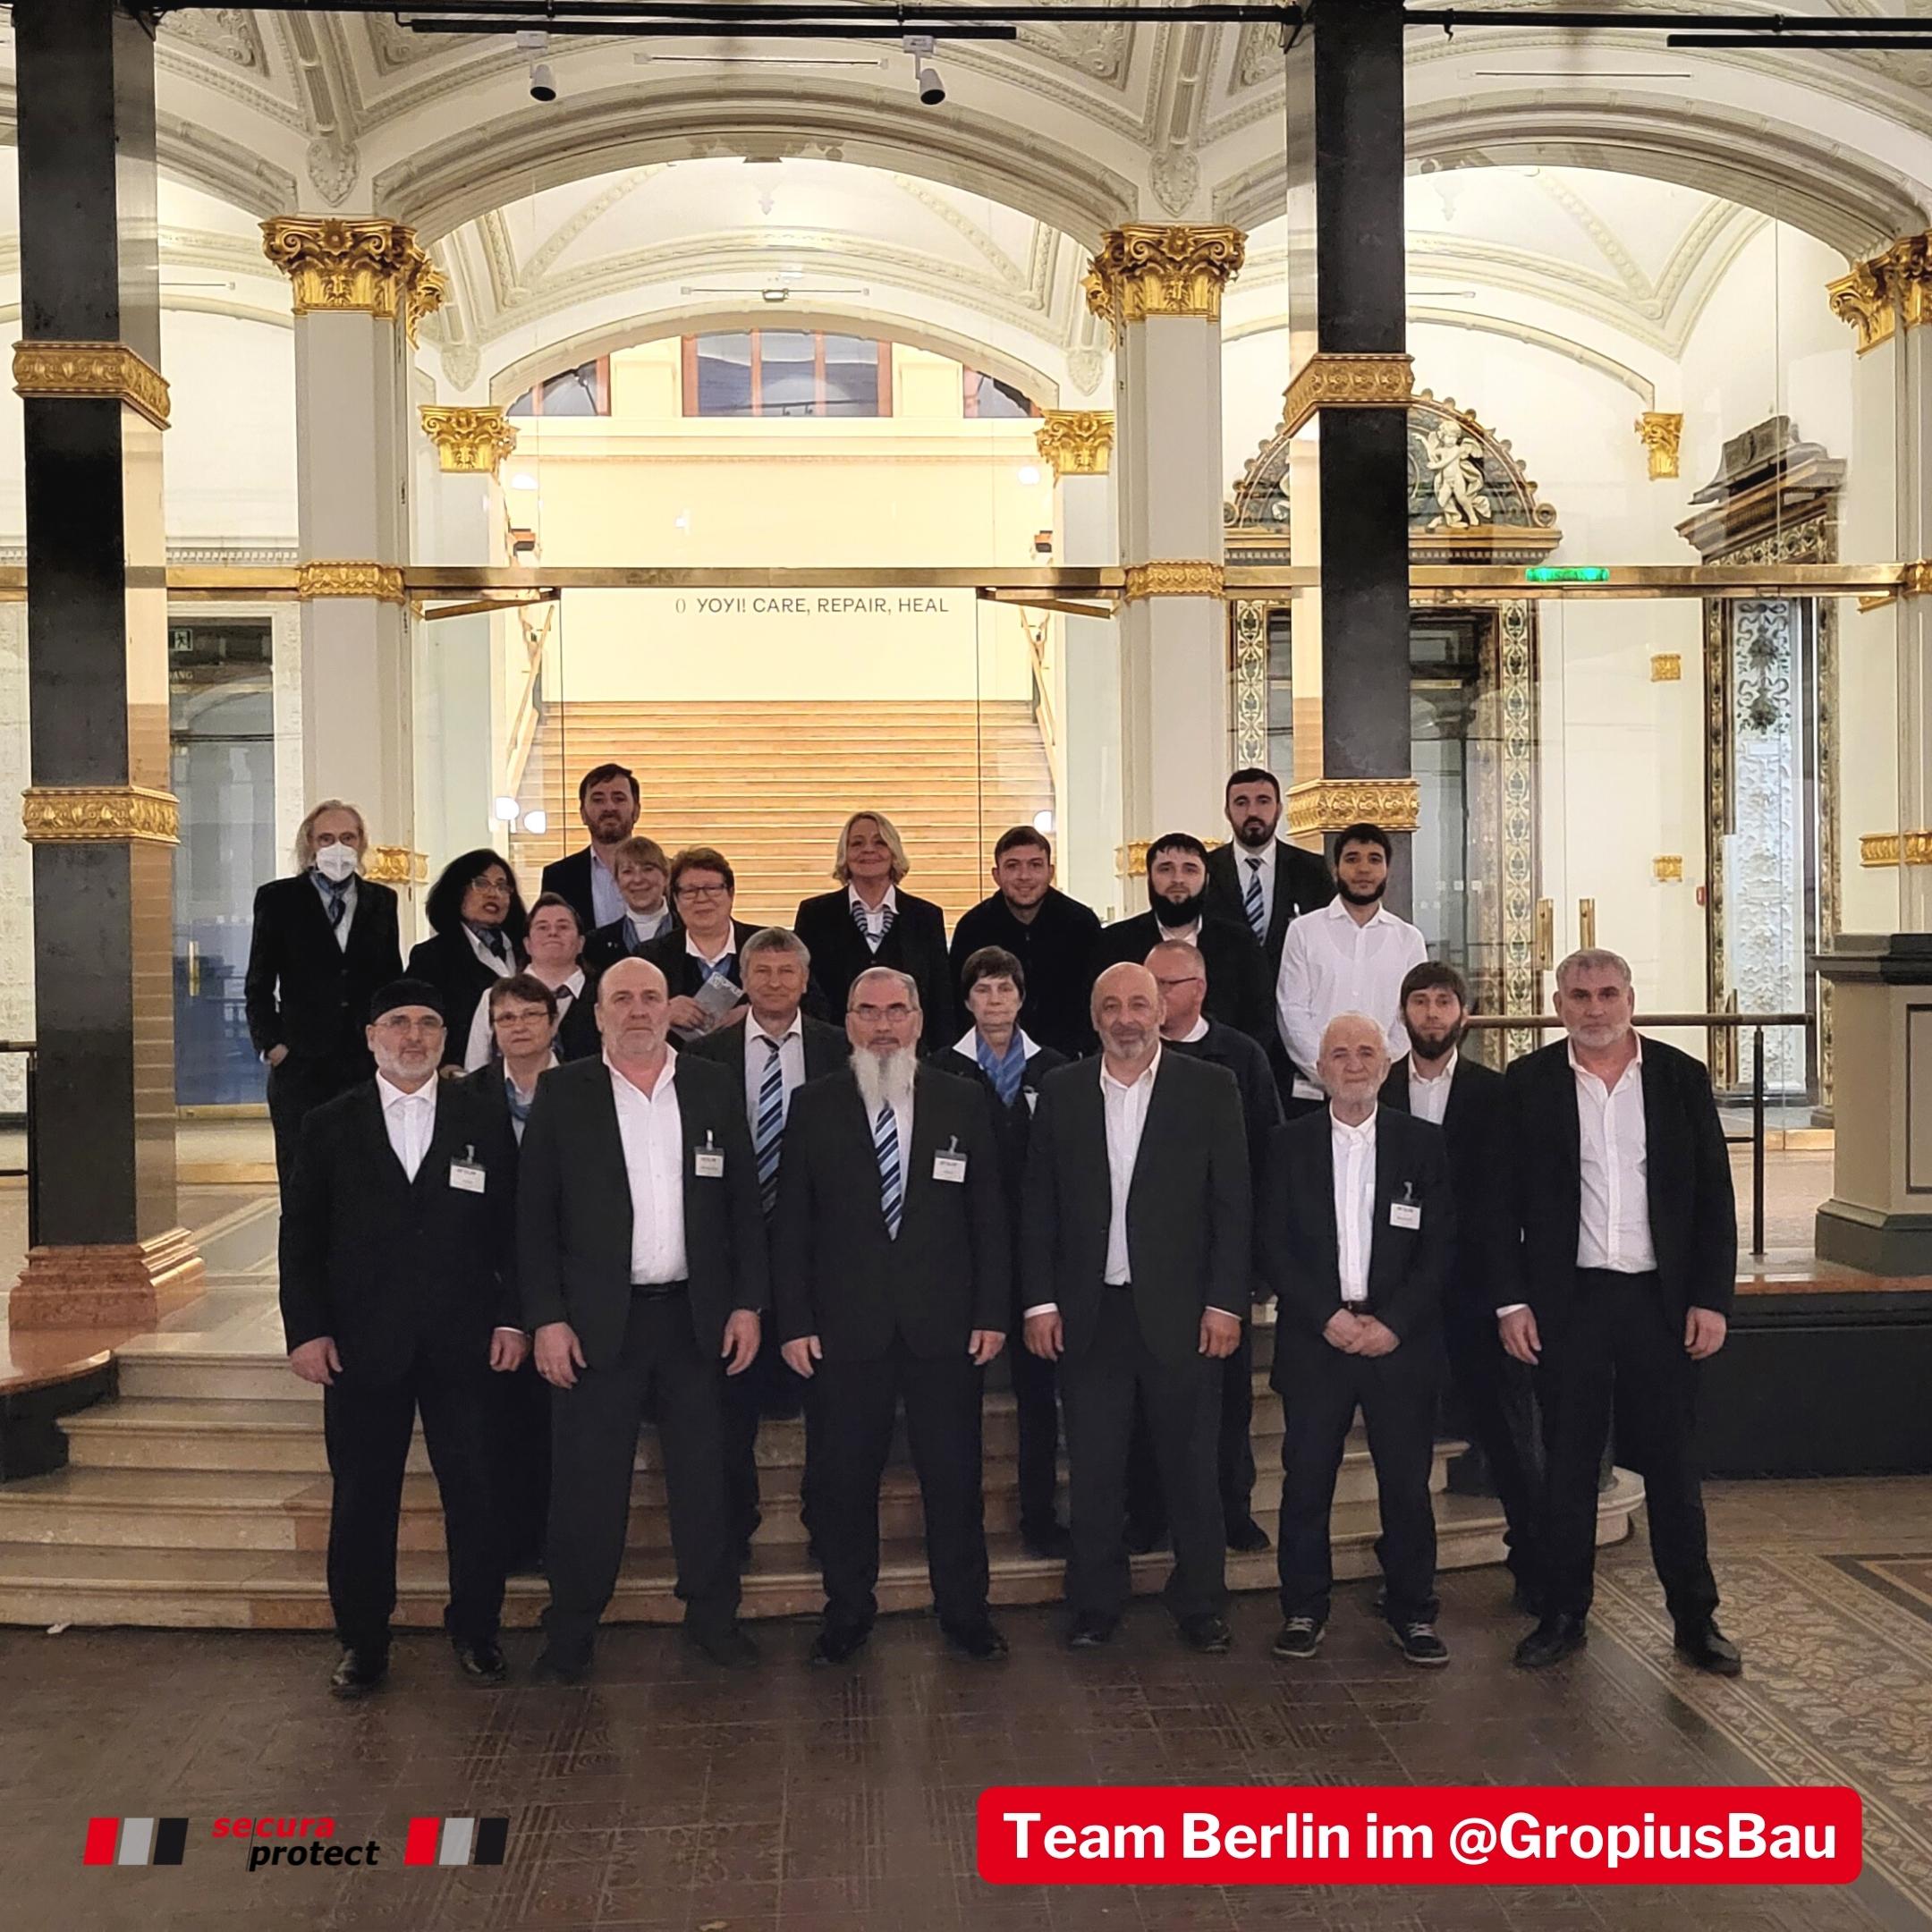 Gruppenfoto secura protect Team Gropius Bau in Berlin